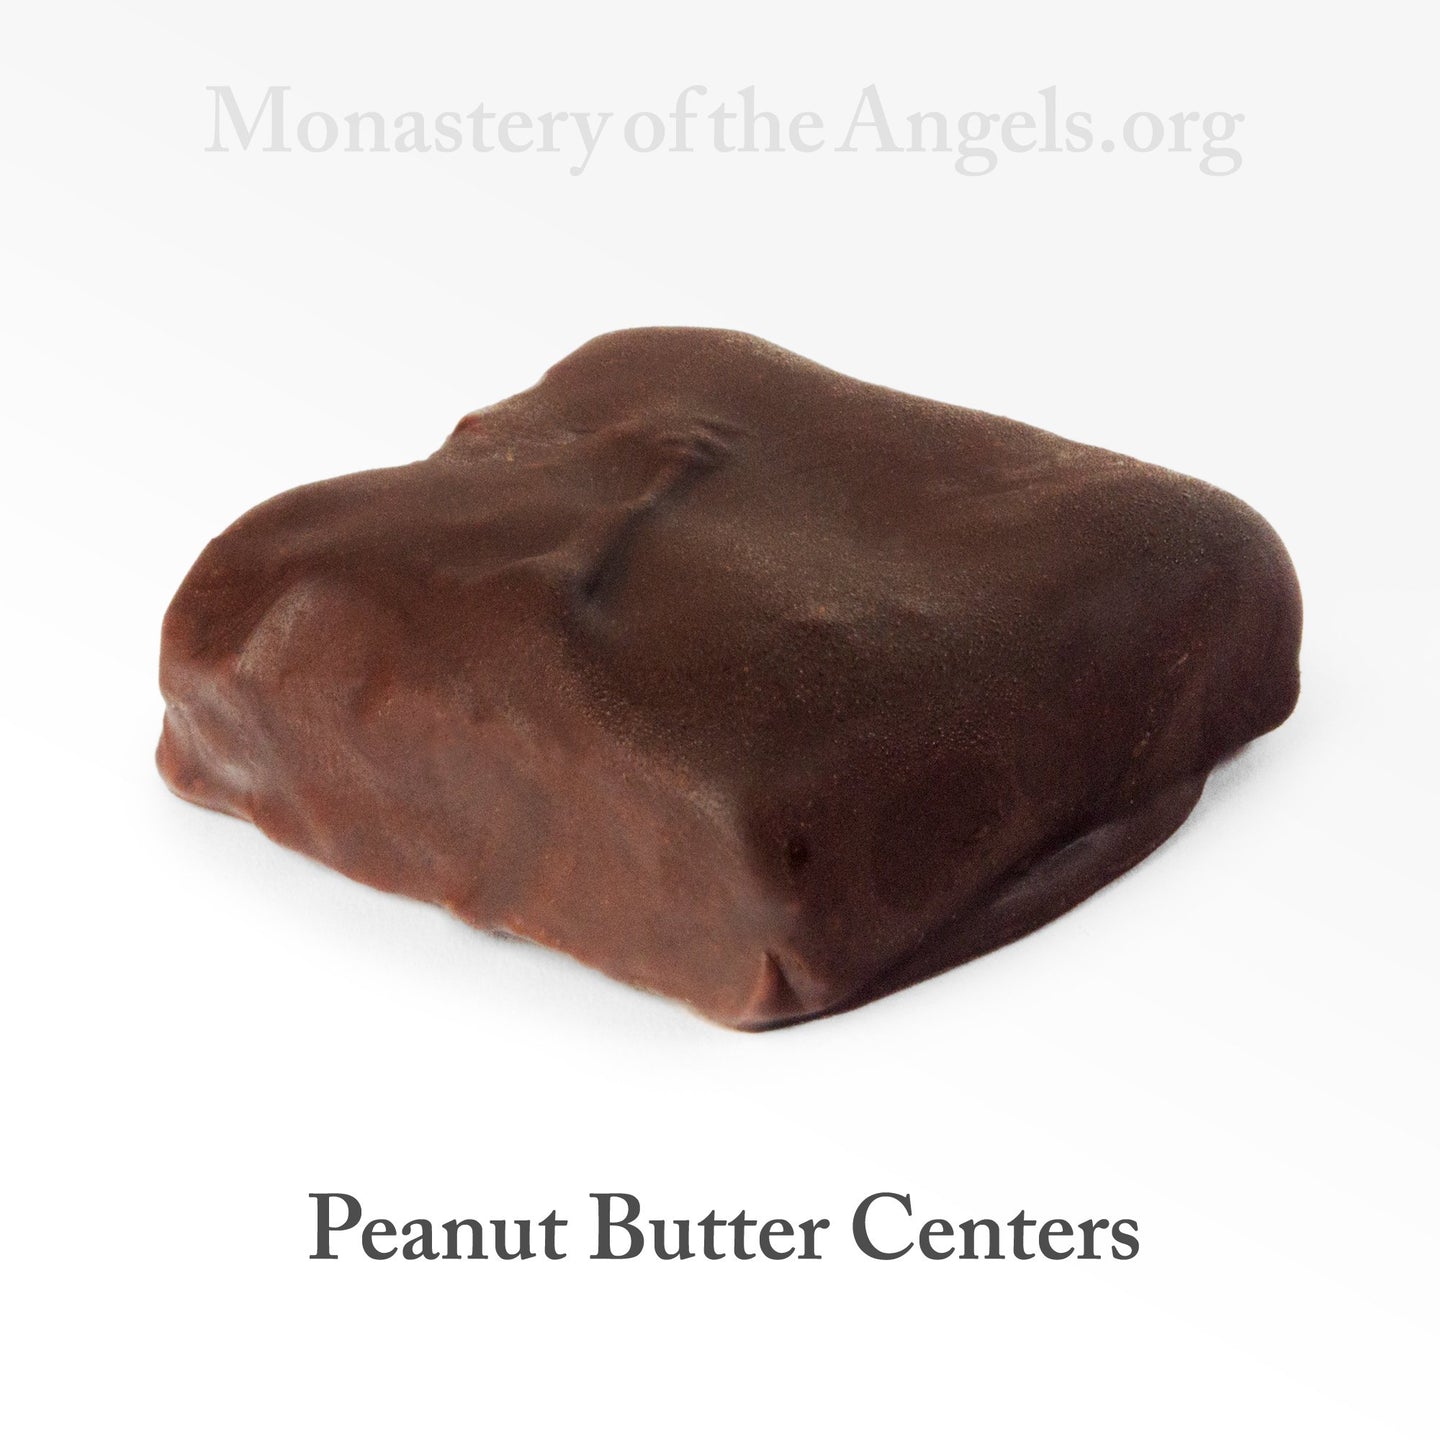 Peanut Butter Centers